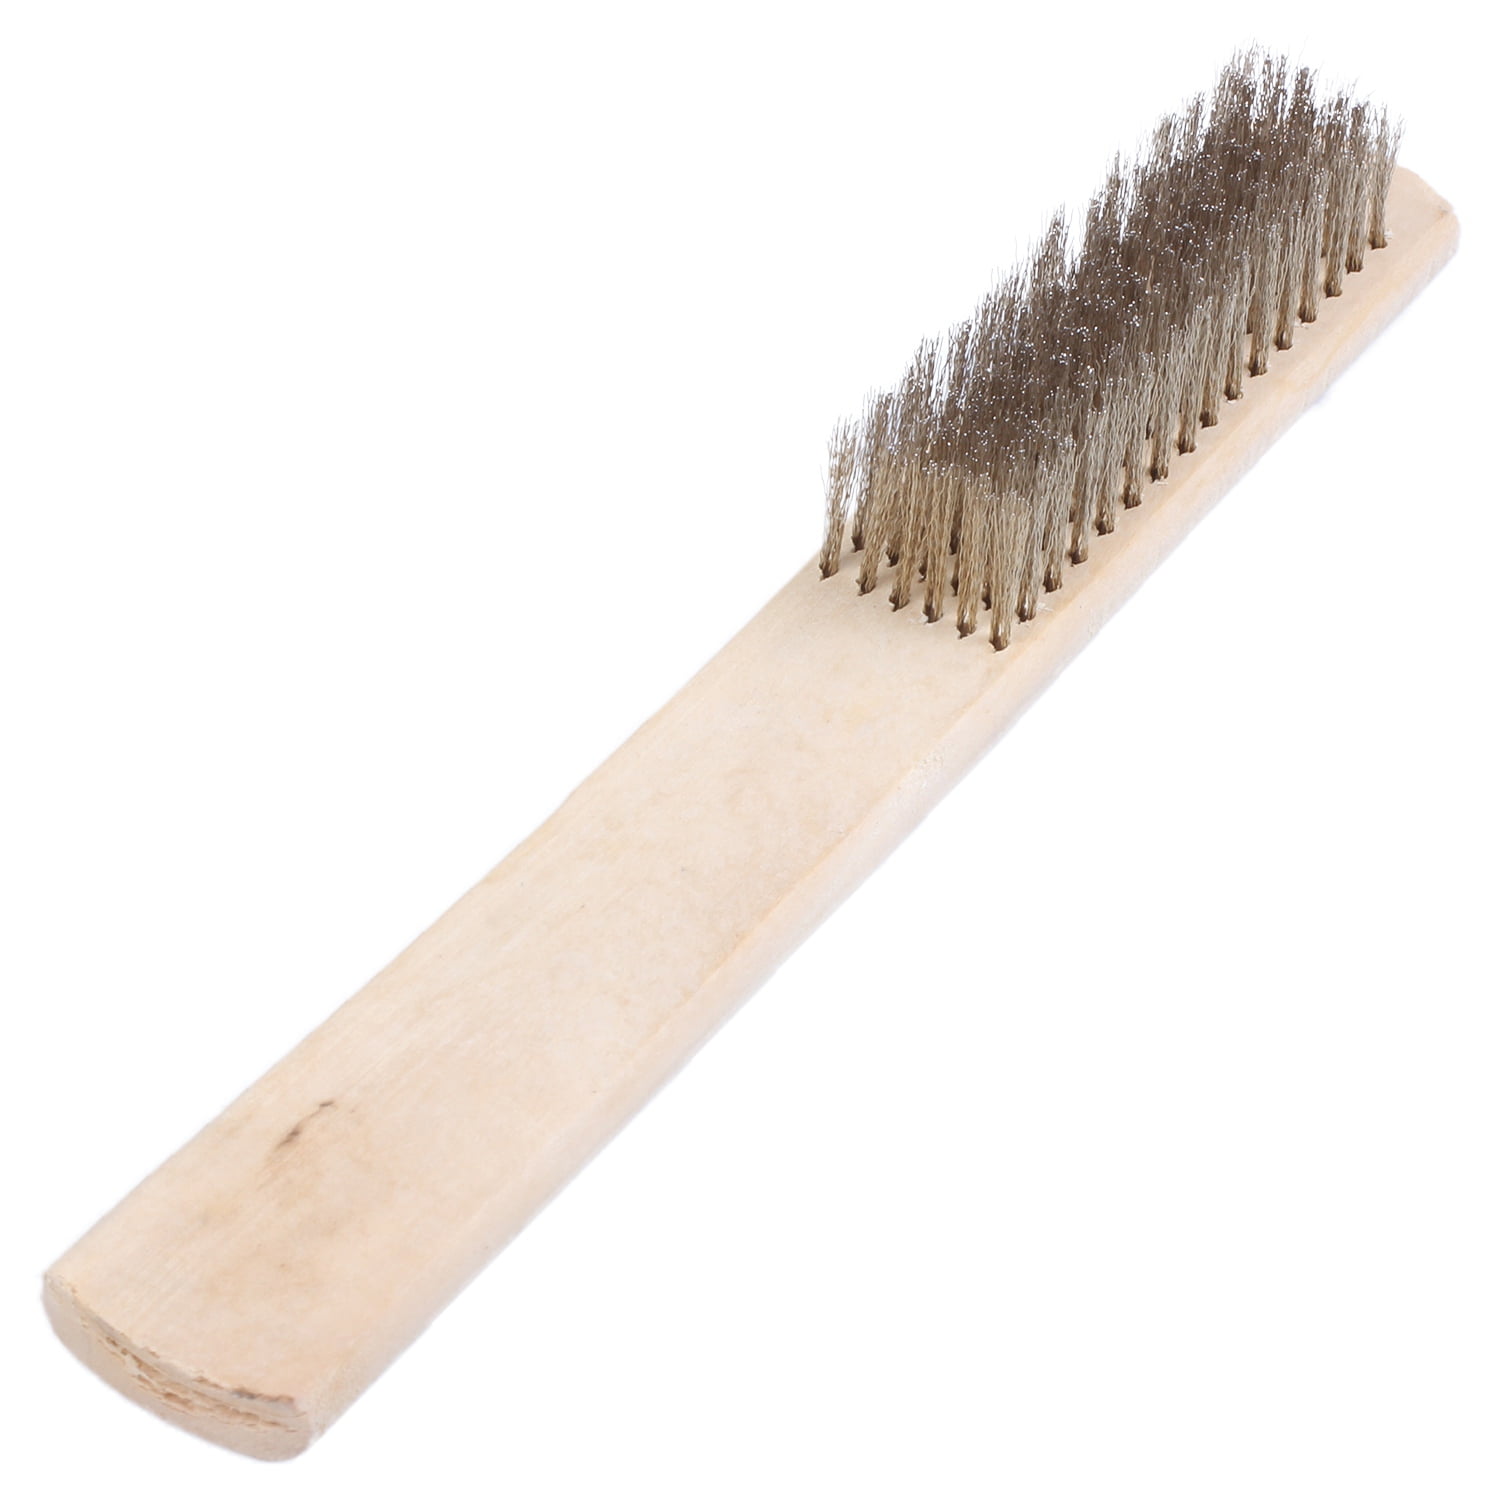 8" Length 6 Rows Brass Bristle Wood Handle Wire Scratch Brush V2U5 